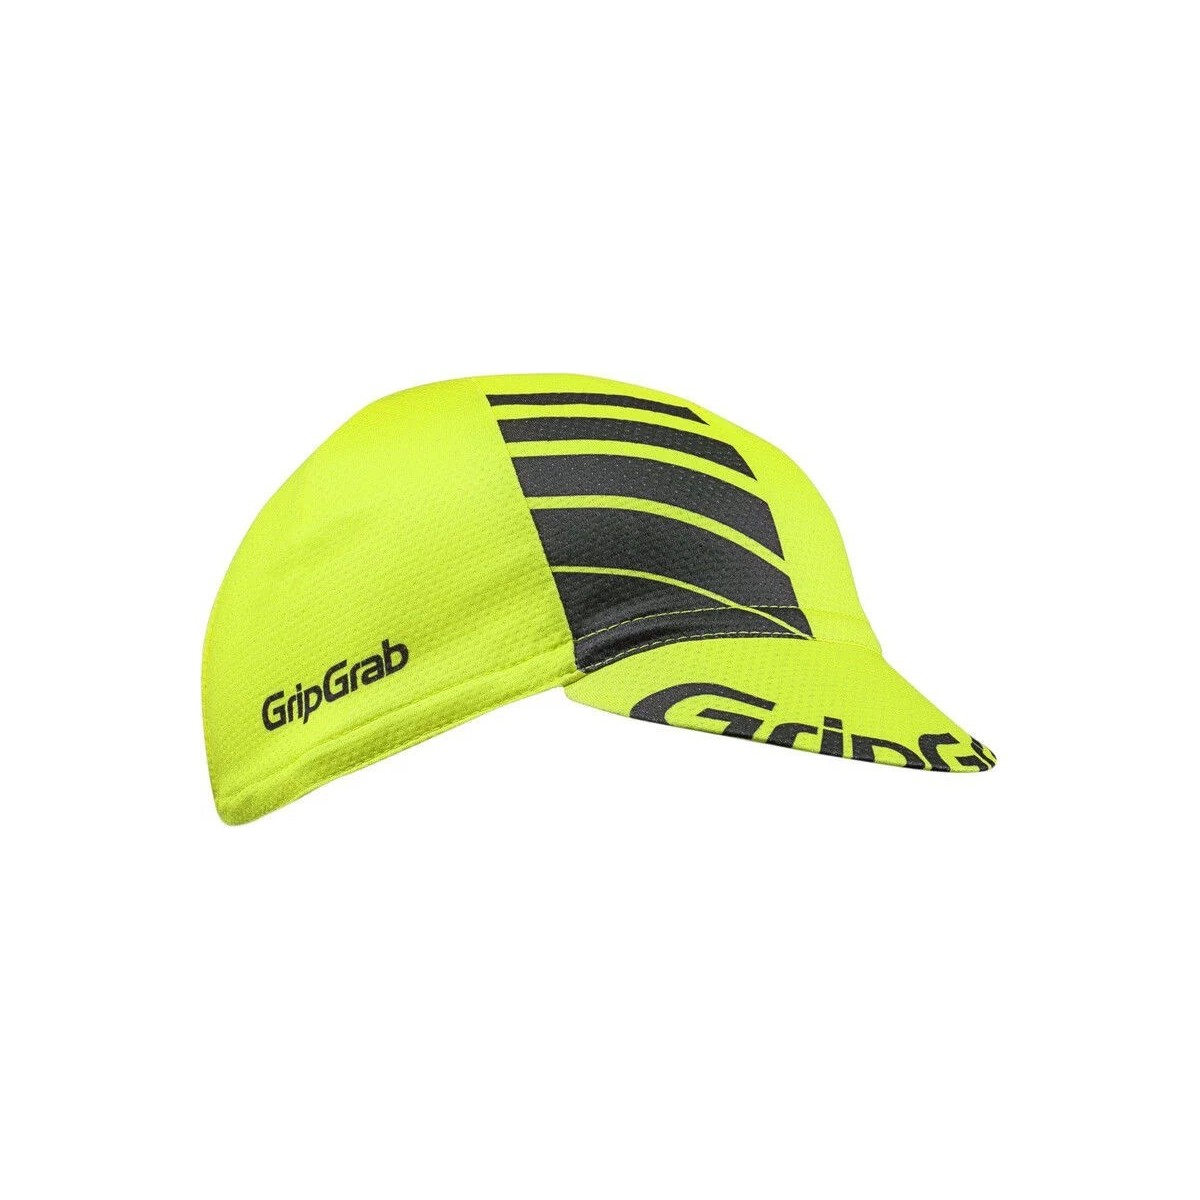 GRIPGRAB Lightweight Summer Cycling Cap - yellow/black